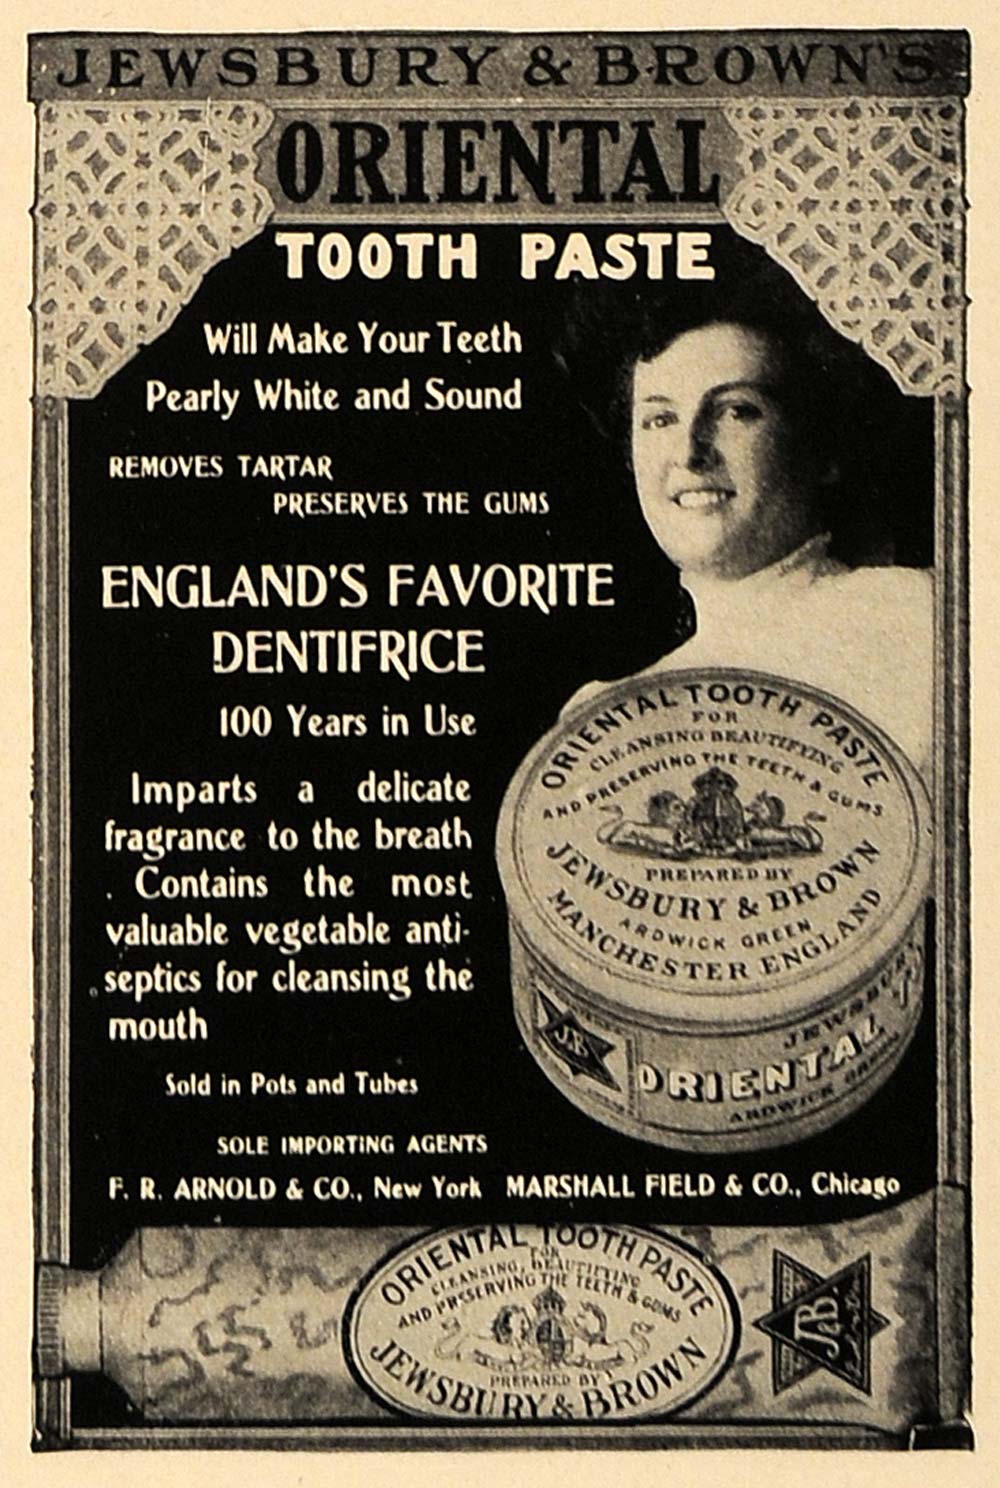 1906 Ad F R Arnold Jewsbury Browns Oriental Toothpaste - ORIGINAL CL8